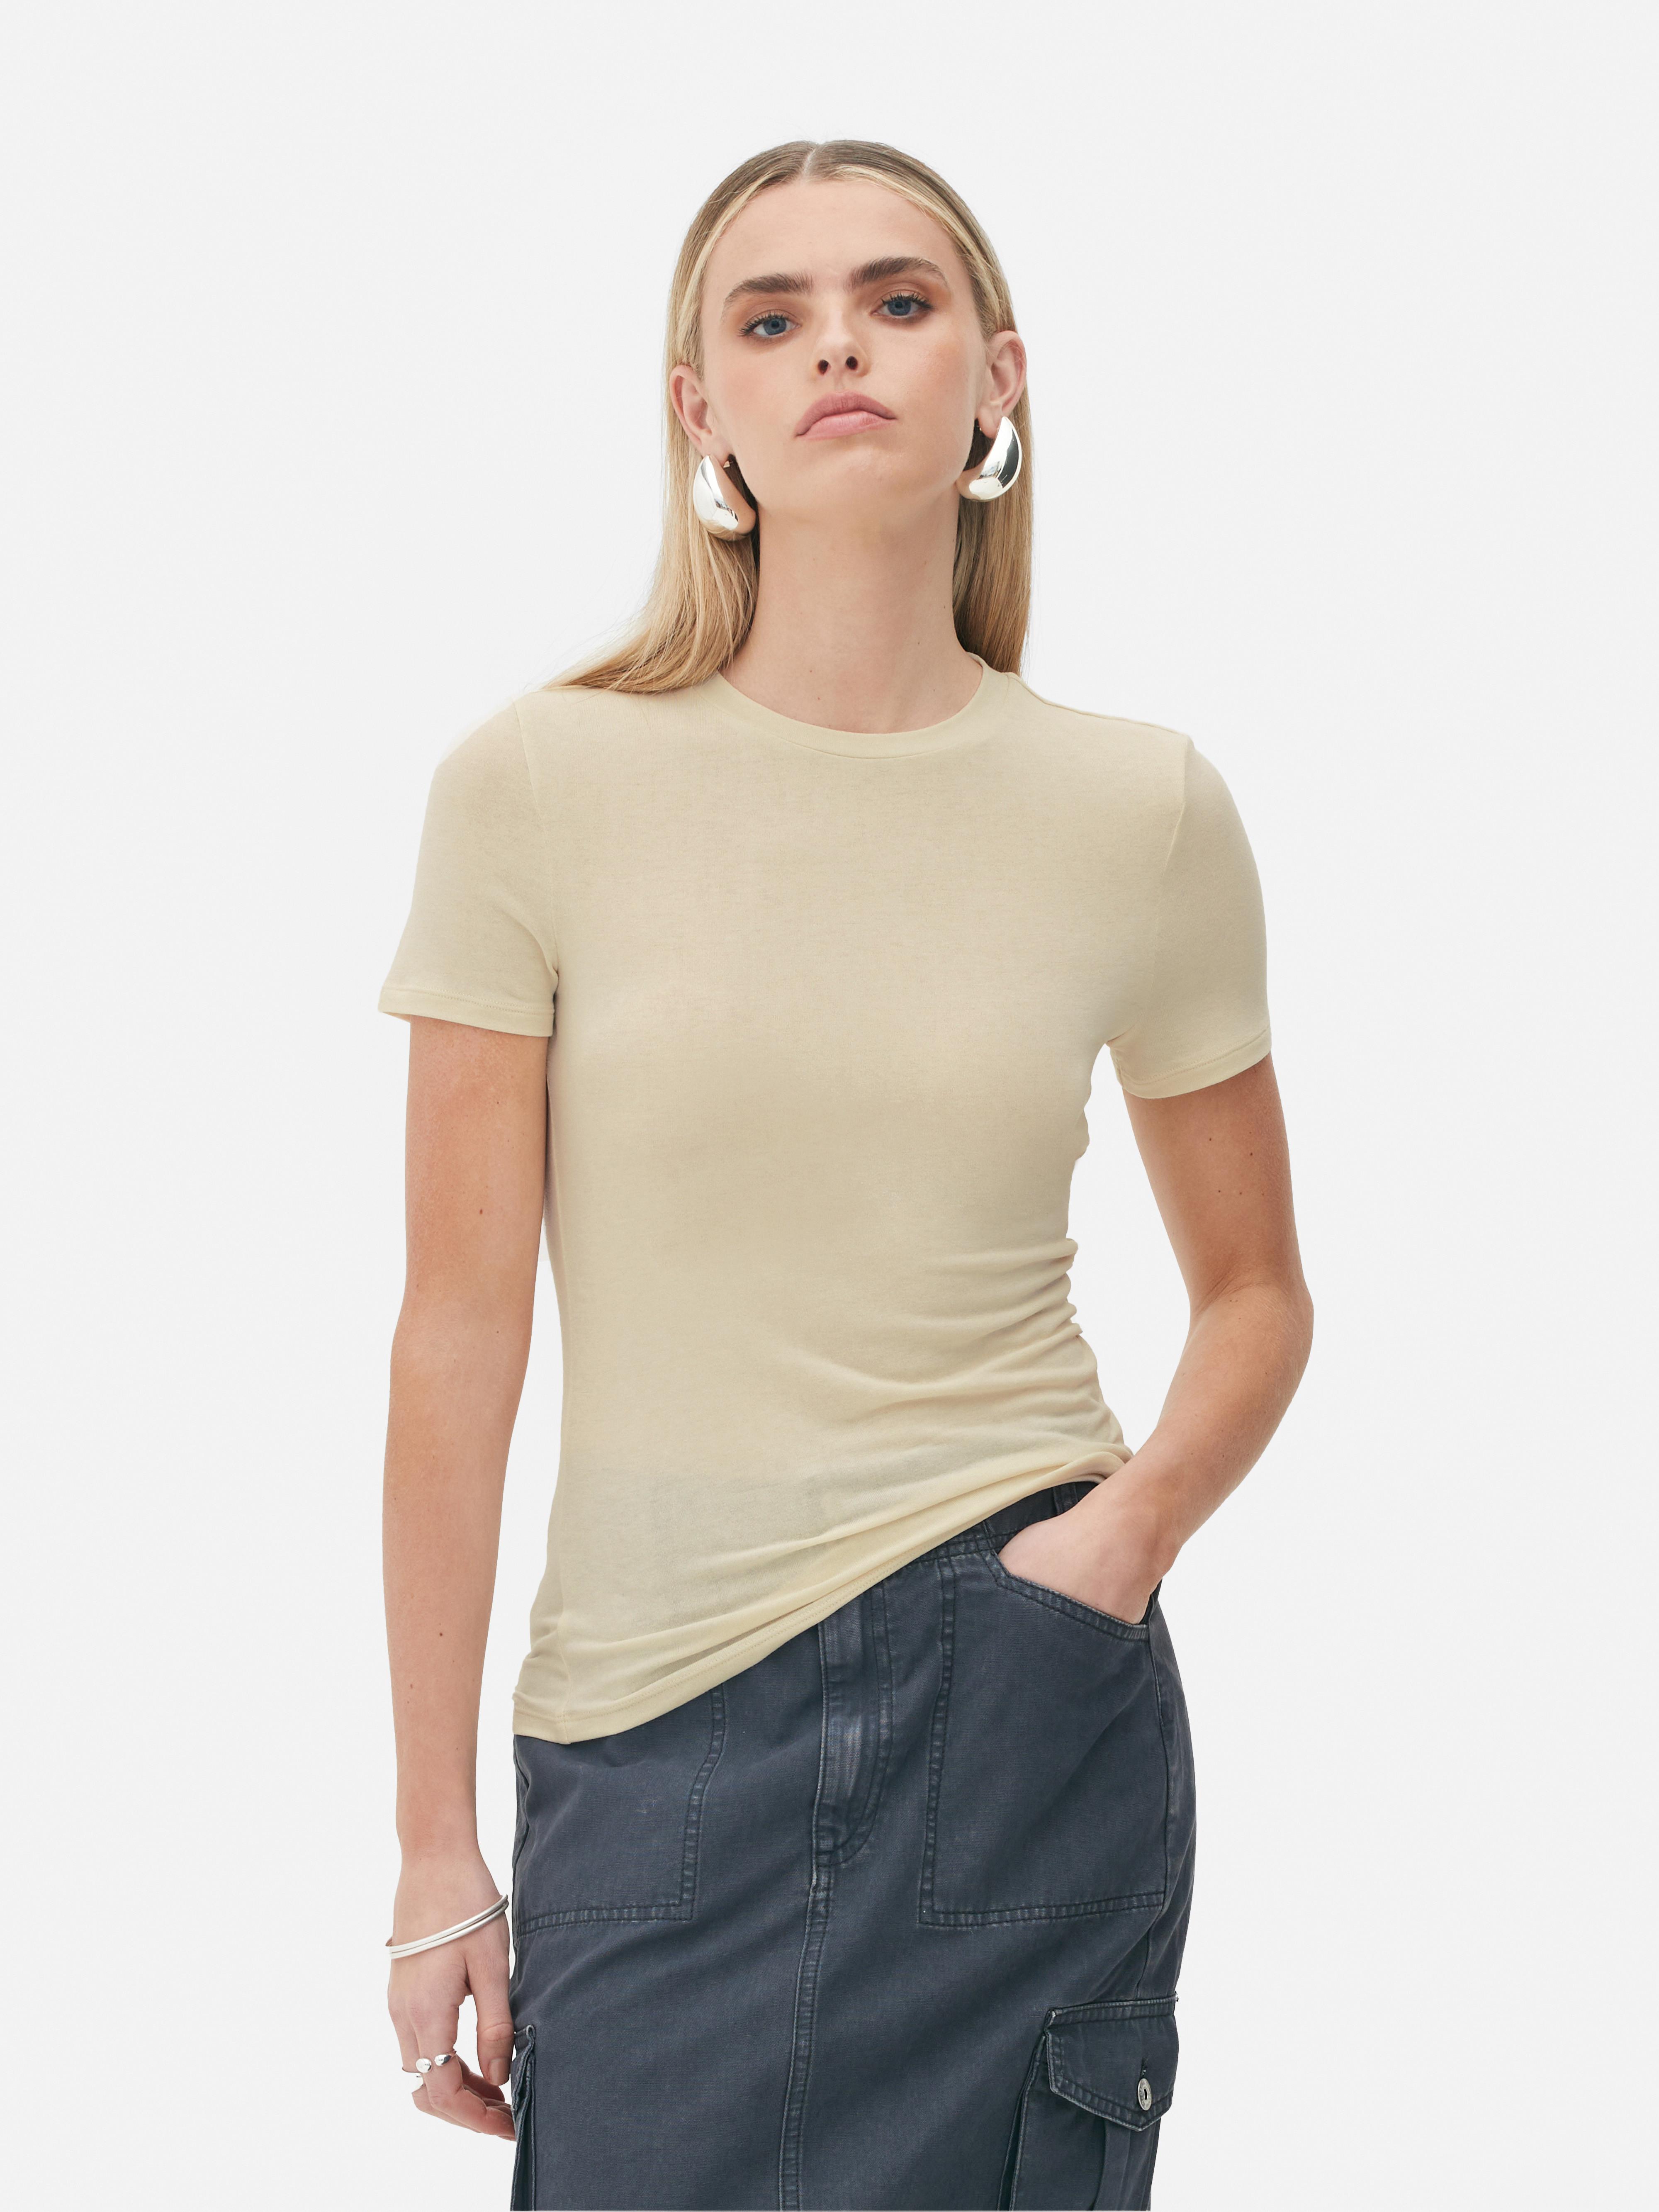 Rita Ora Short Sleeve T-Shirt